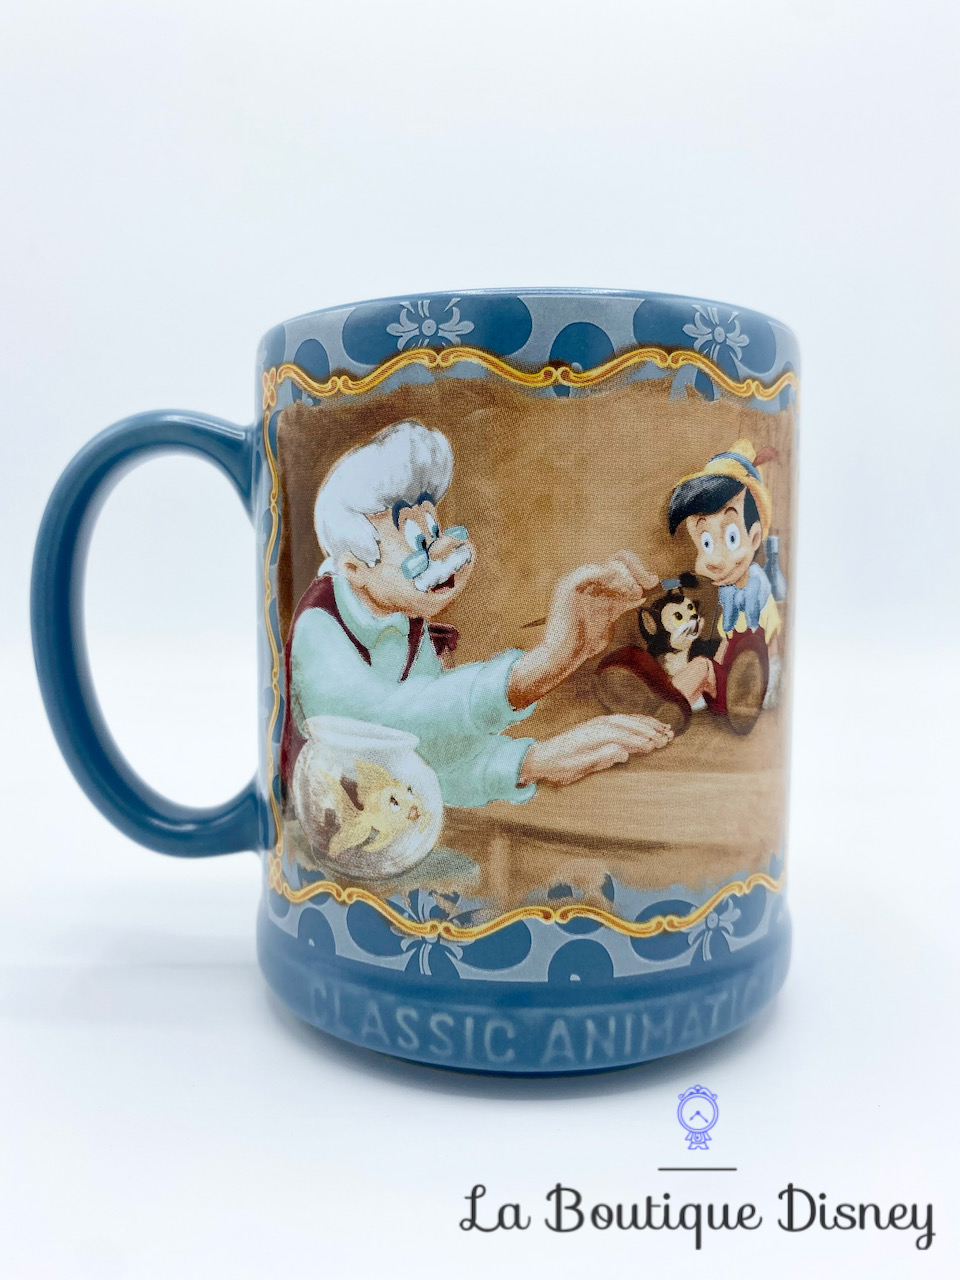 Tasse Pinocchio Disney Store Original Mug Classic Animation bleu Gepetto